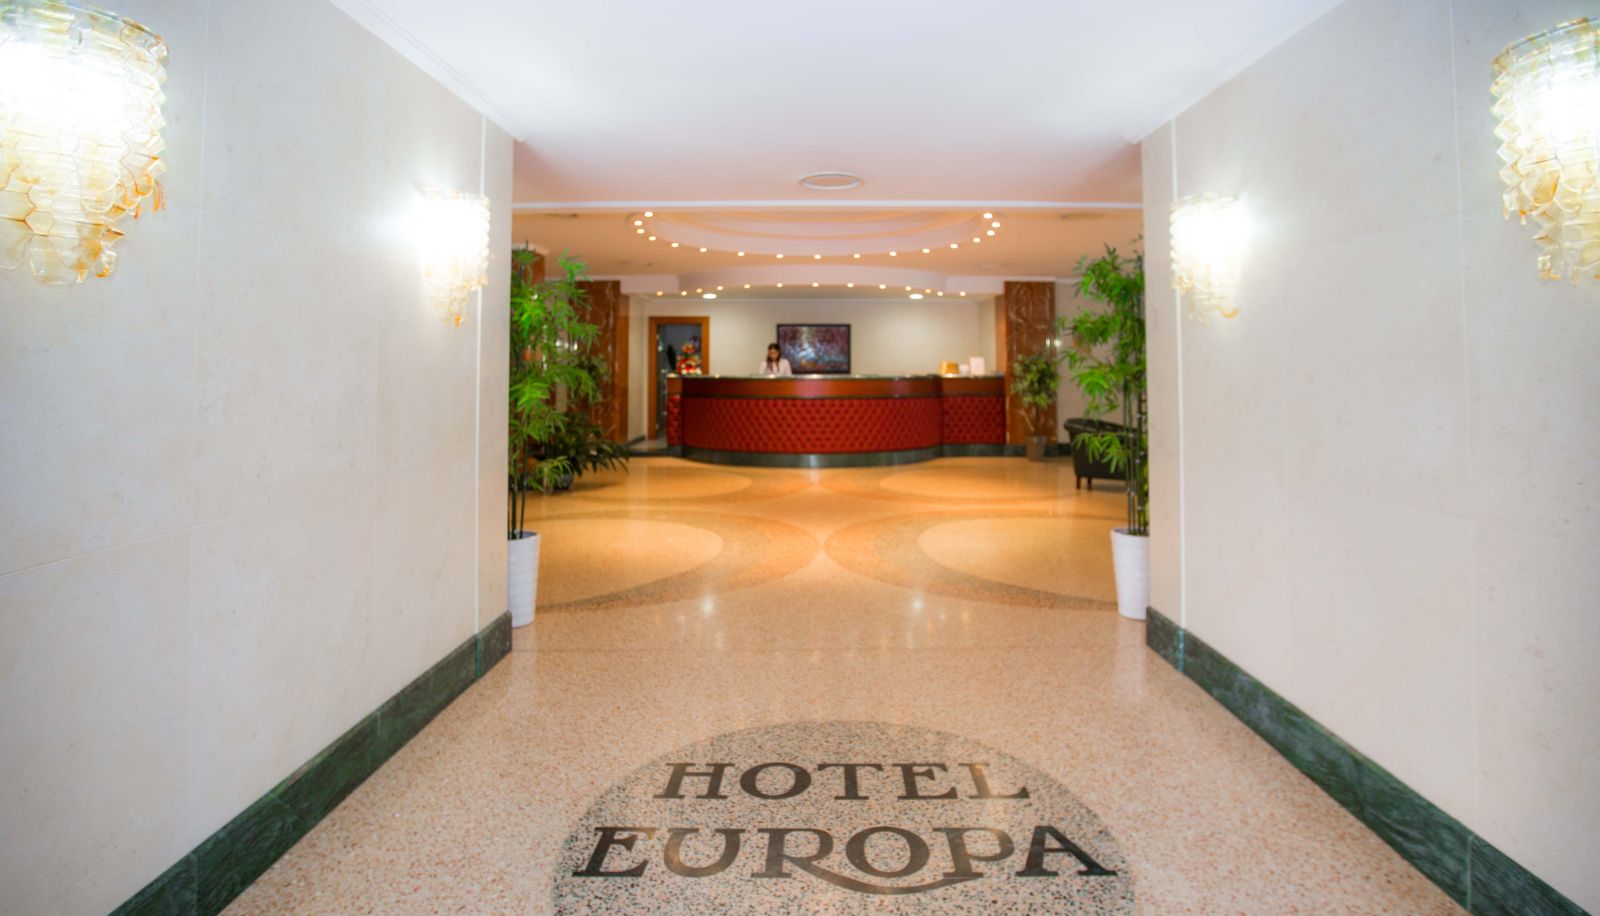 Europa Hotel & Centro Congressi | Cosenza (Rende)